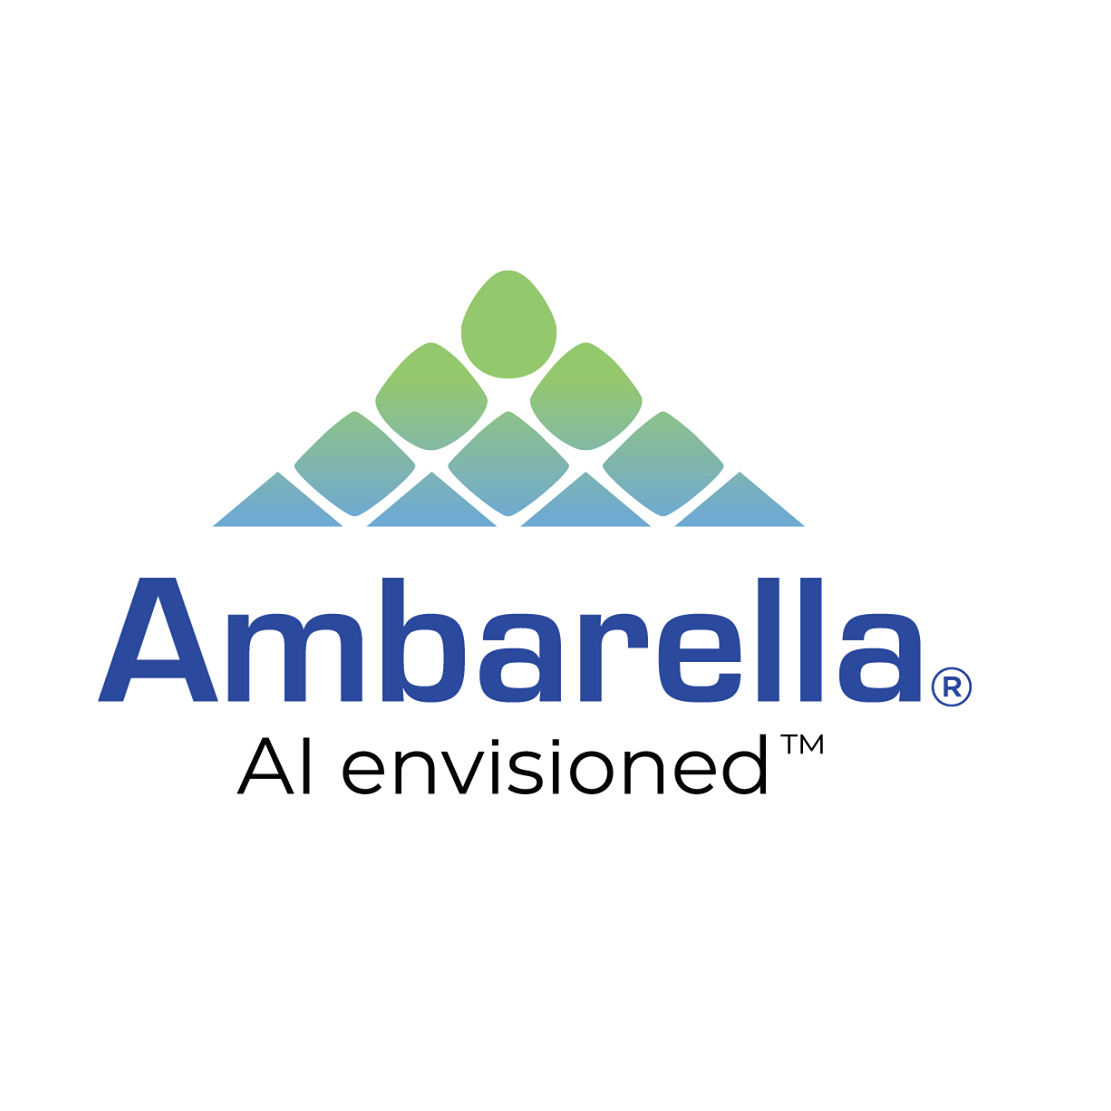 Ambarella Inc